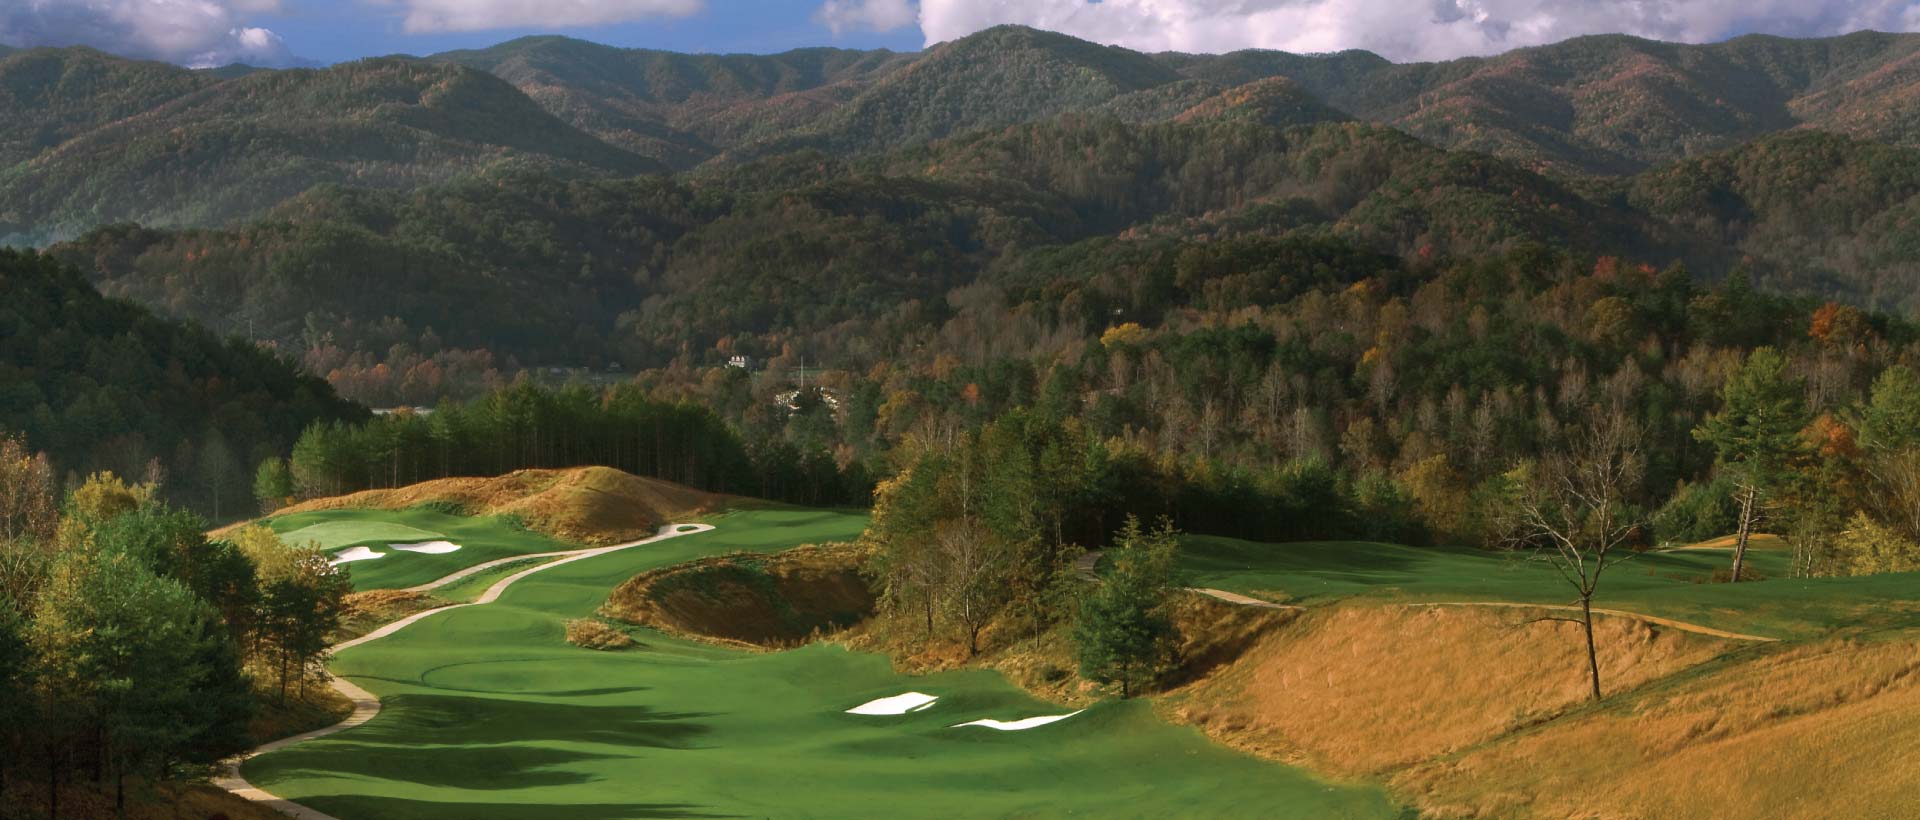 Welcome to Carolinas Golf & Vacation ResortsPremier Destinations